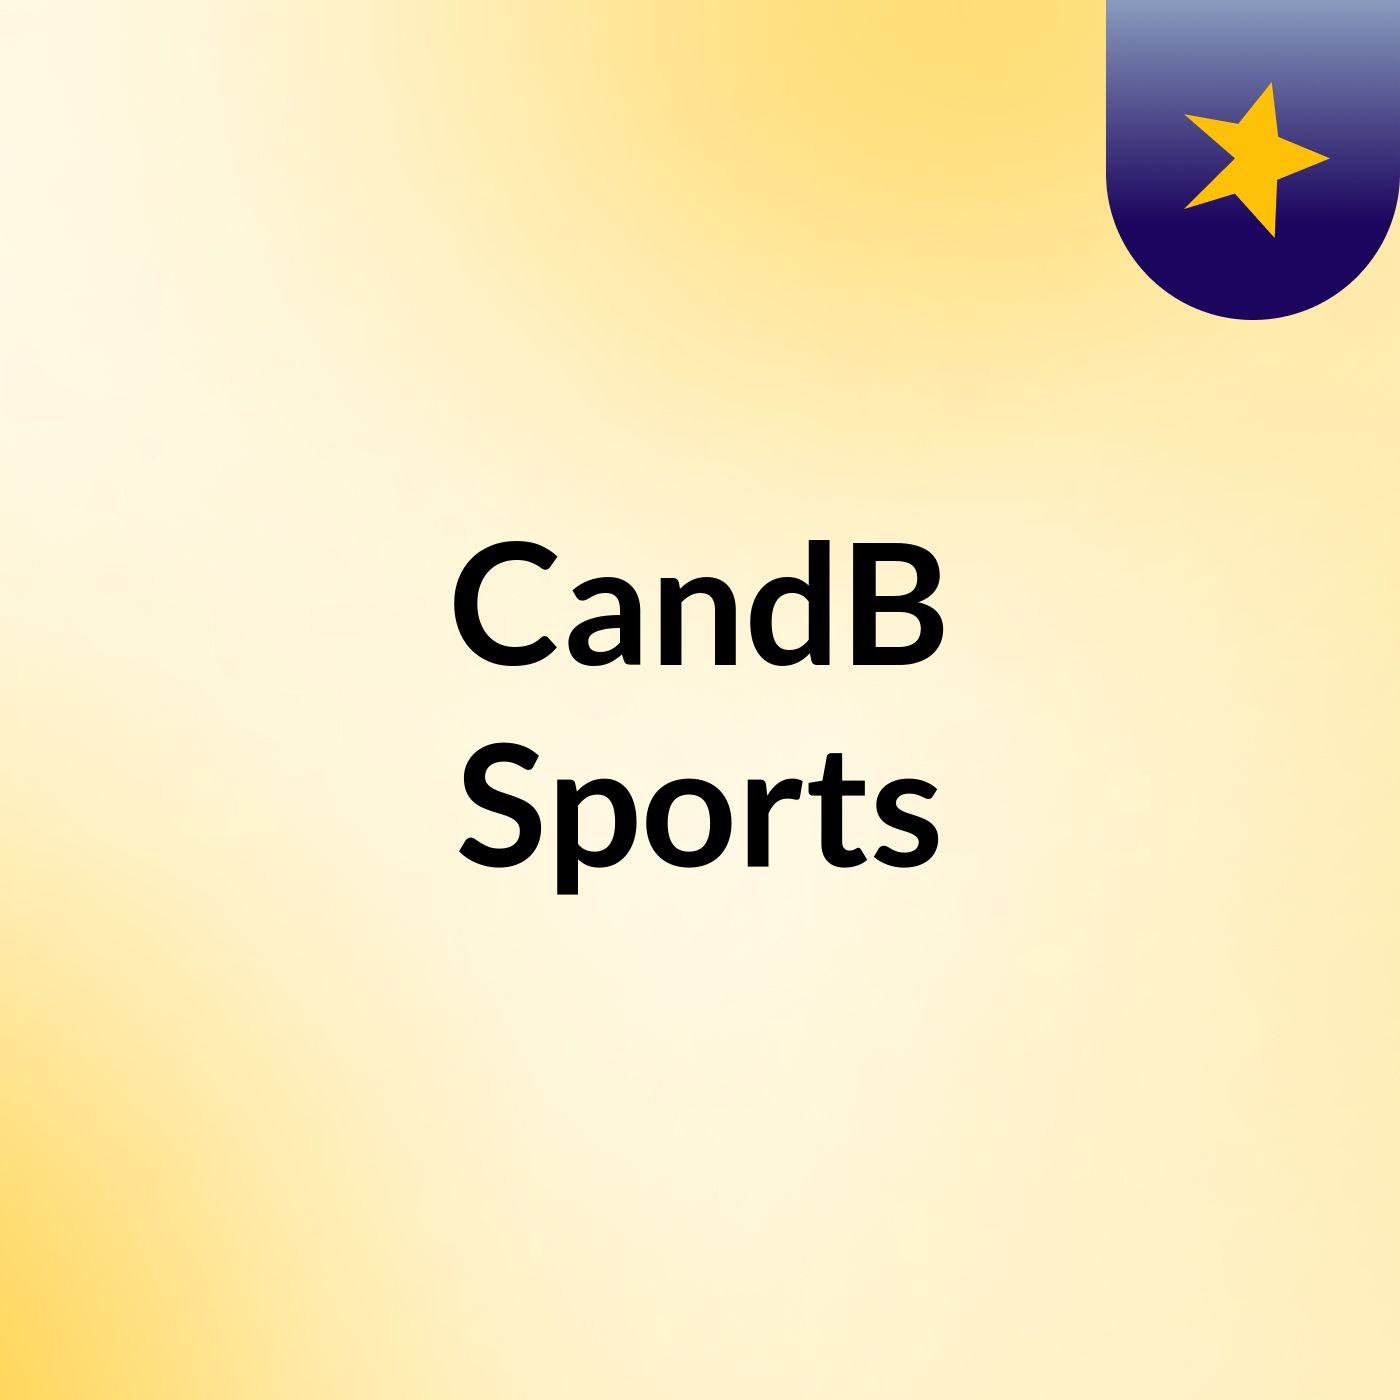 Episode 7 - CandB Sports